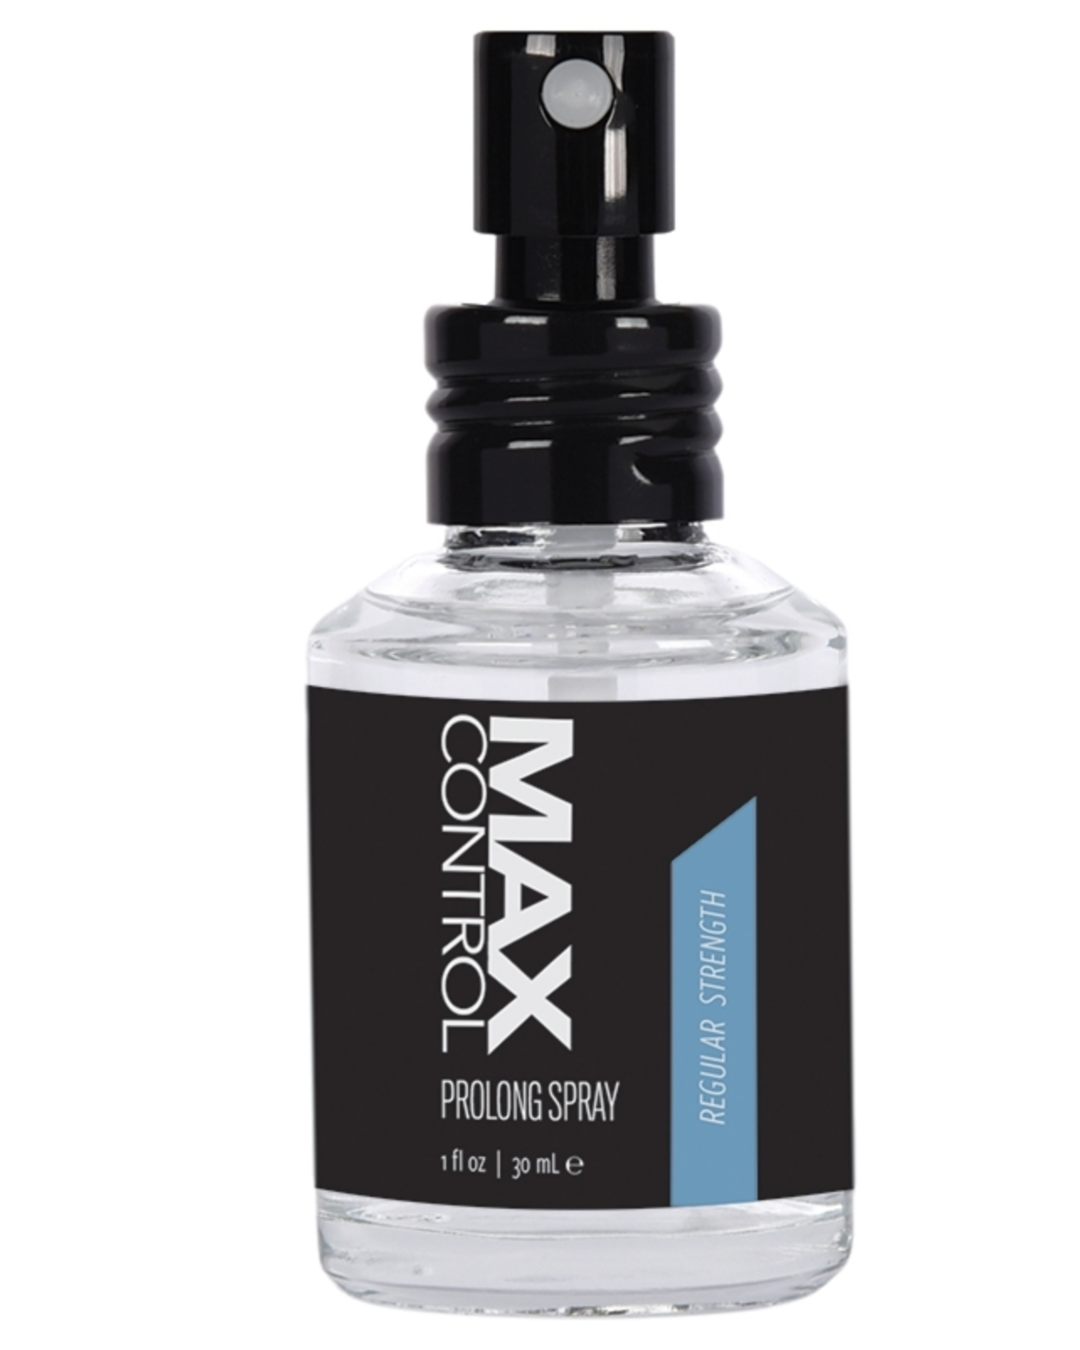 Max Control Prolong Spray Regular Strength - 1oz spray bottle